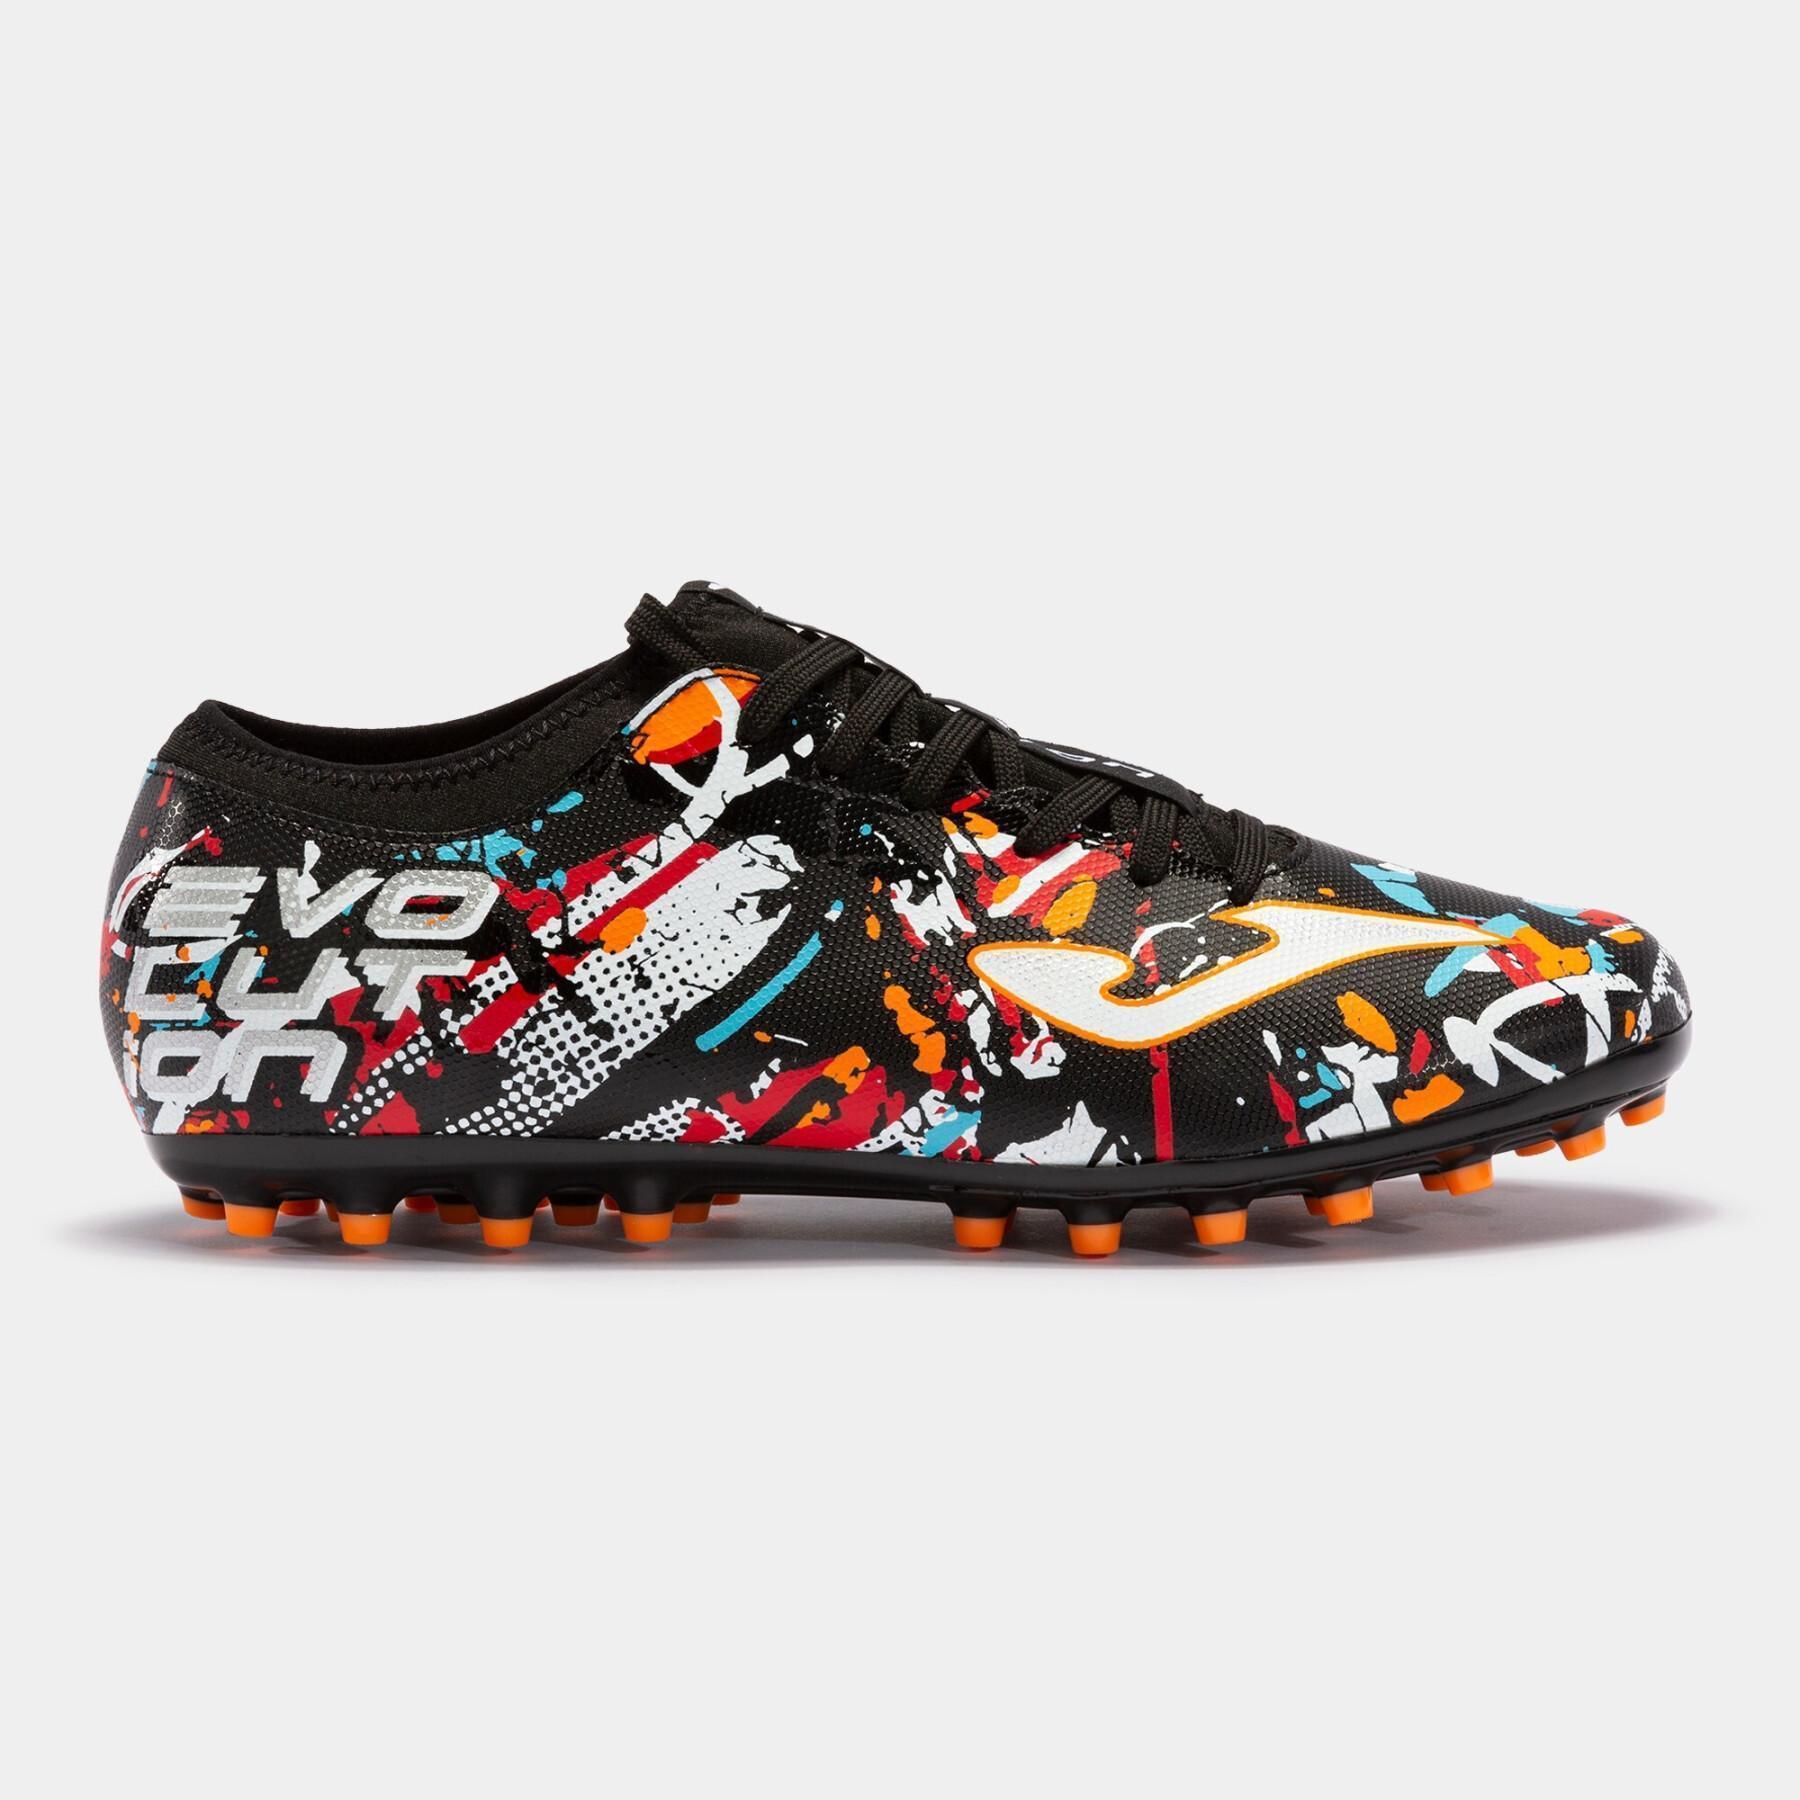 Chaussures de football terrain synthétique enfant Joma Evolution 2331